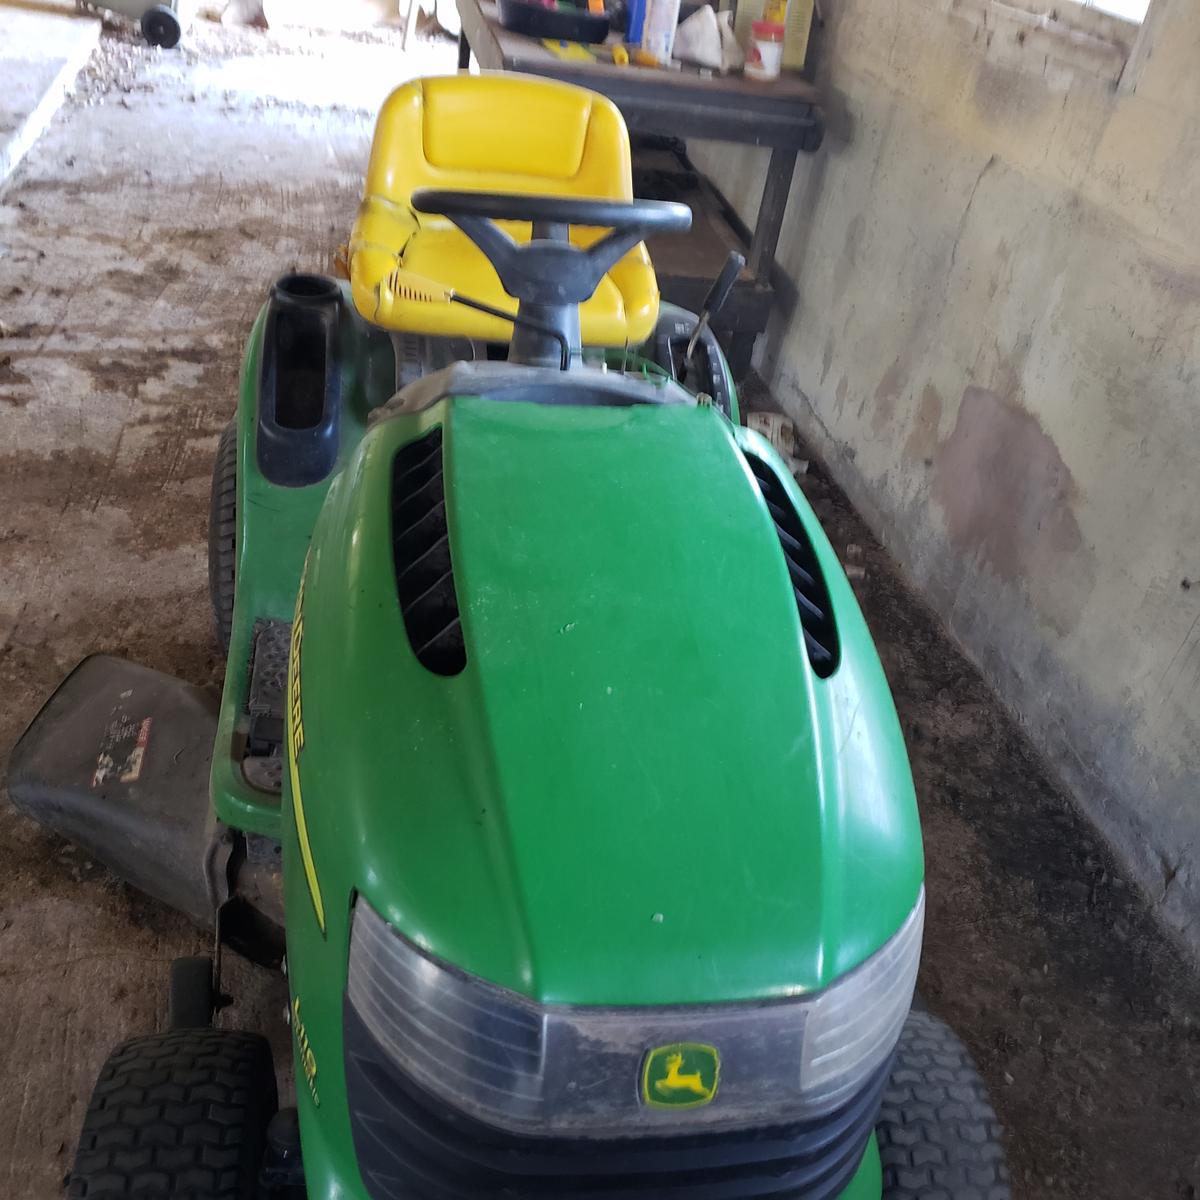 John Deere L110 Automatic 17.5 Hp 42” Riding Lawn Mower